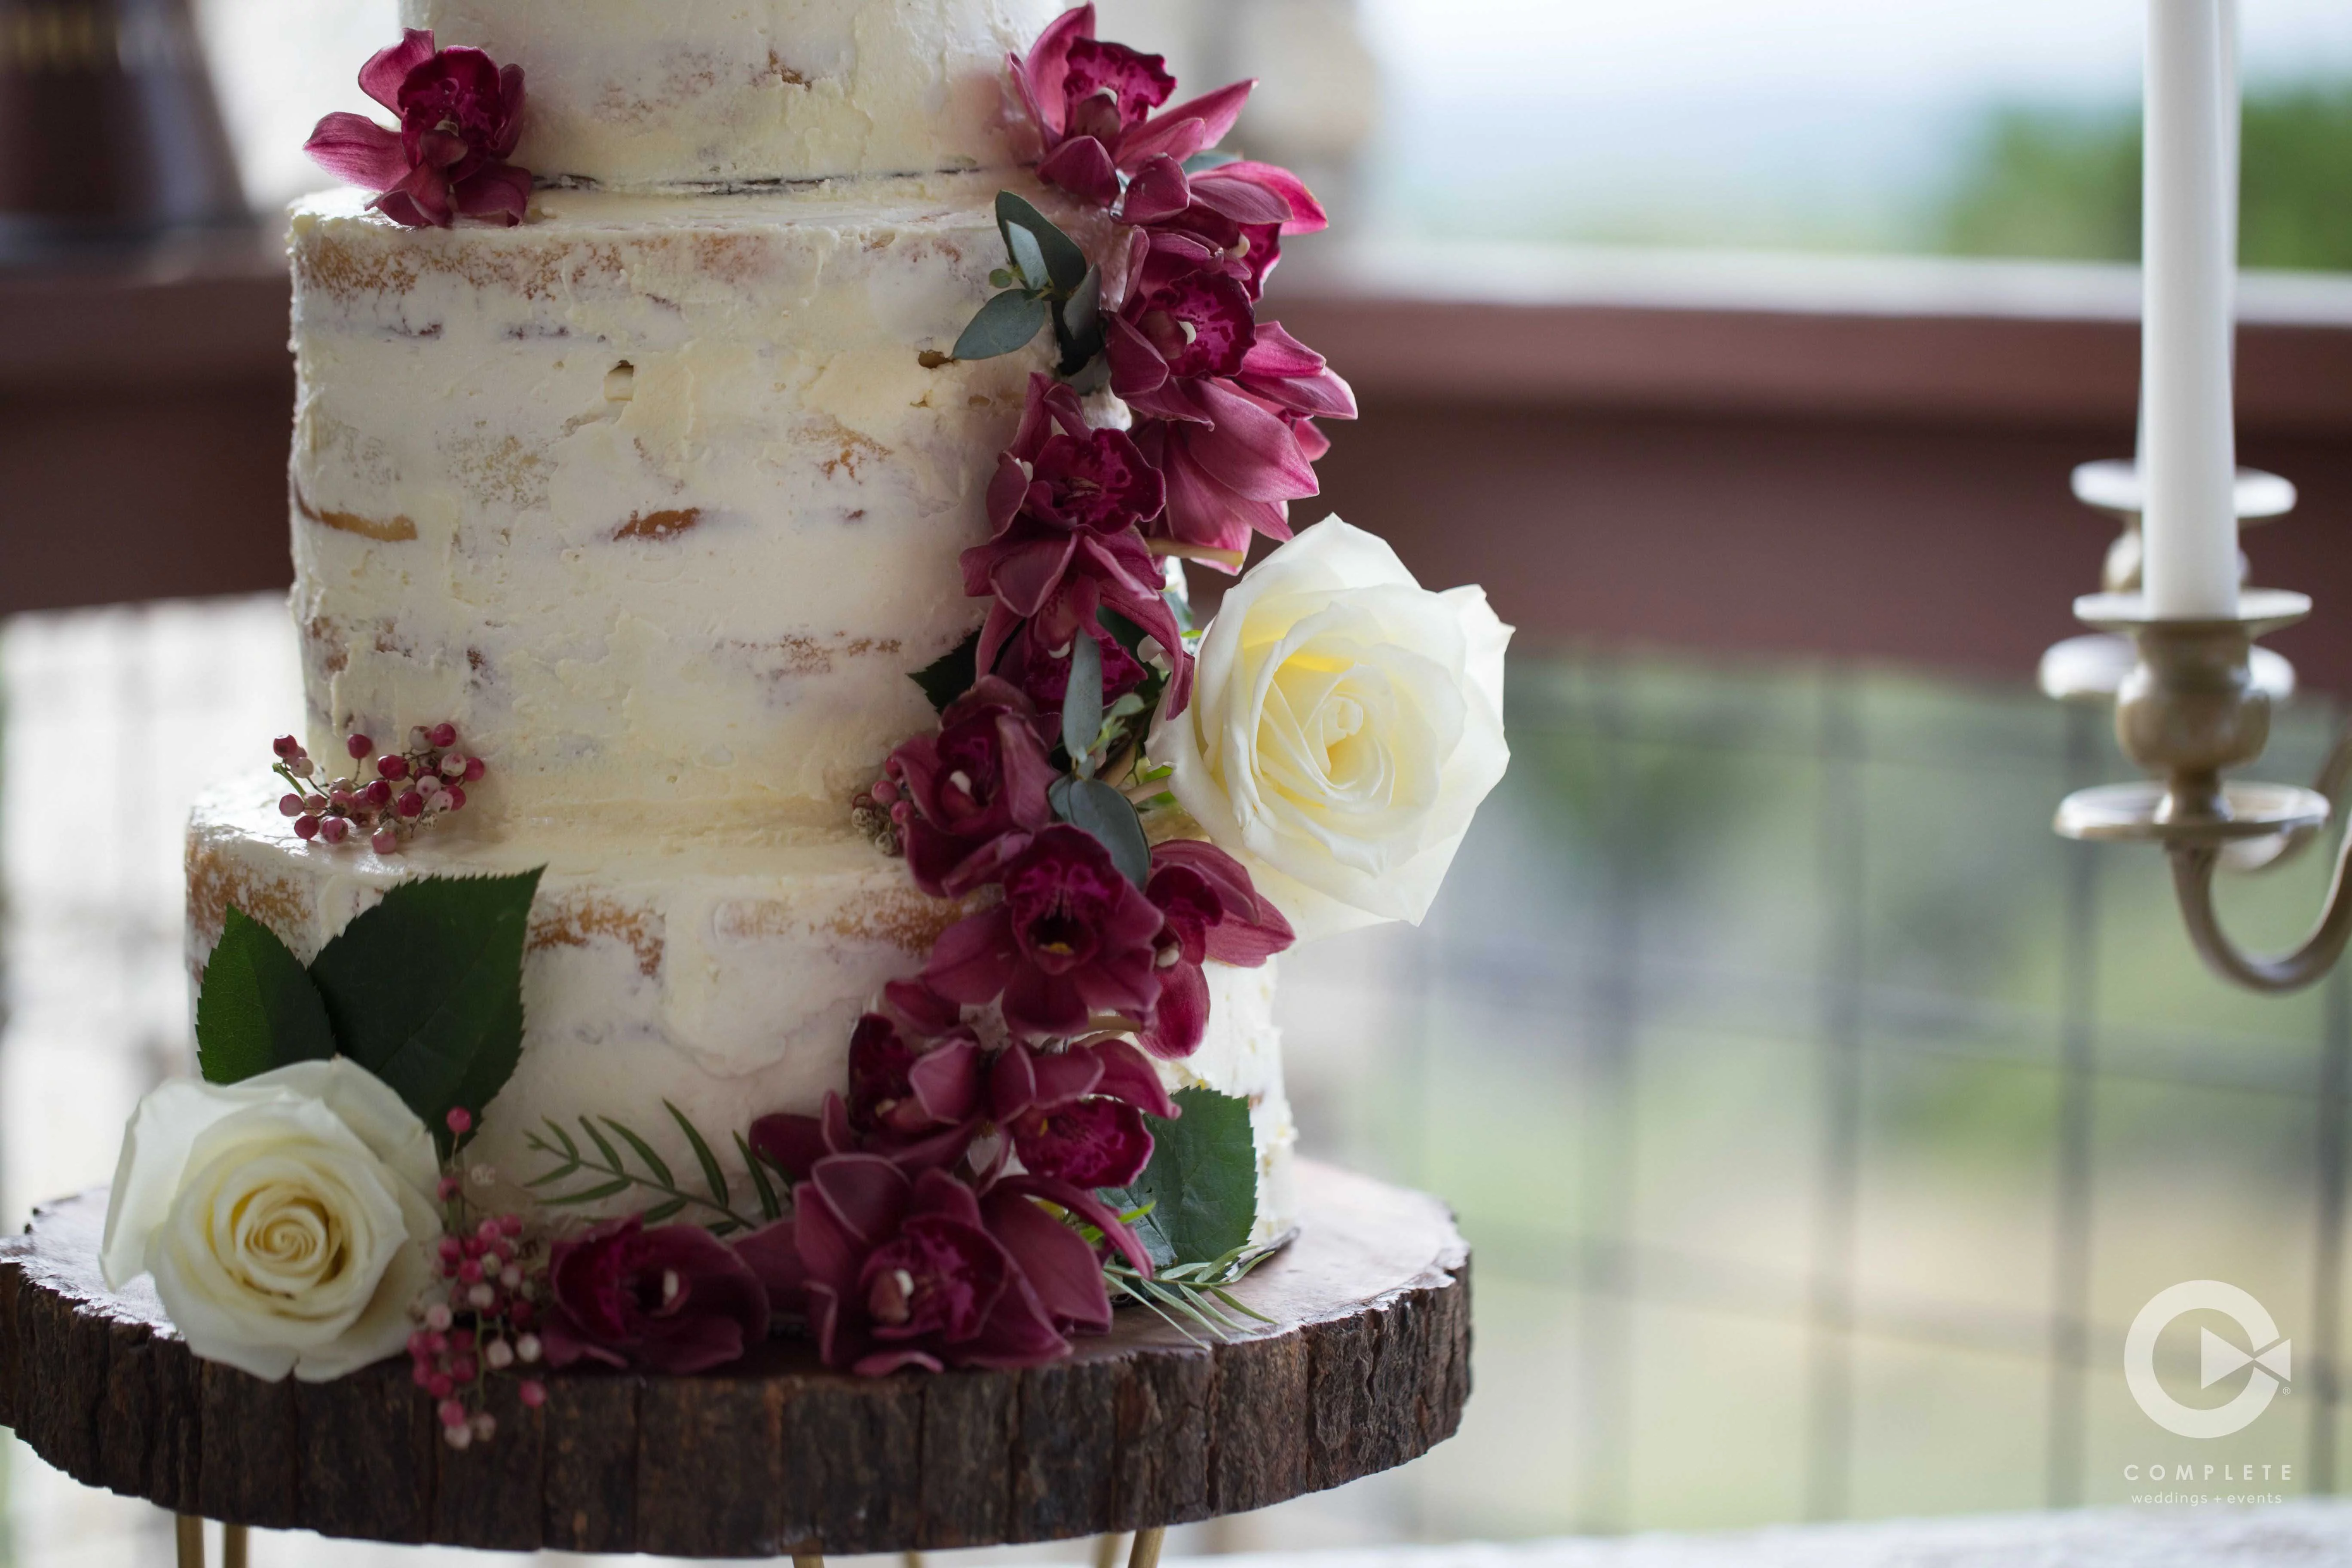 How Many Wedding Cake Tiers Do You Need? - The Wedding Community